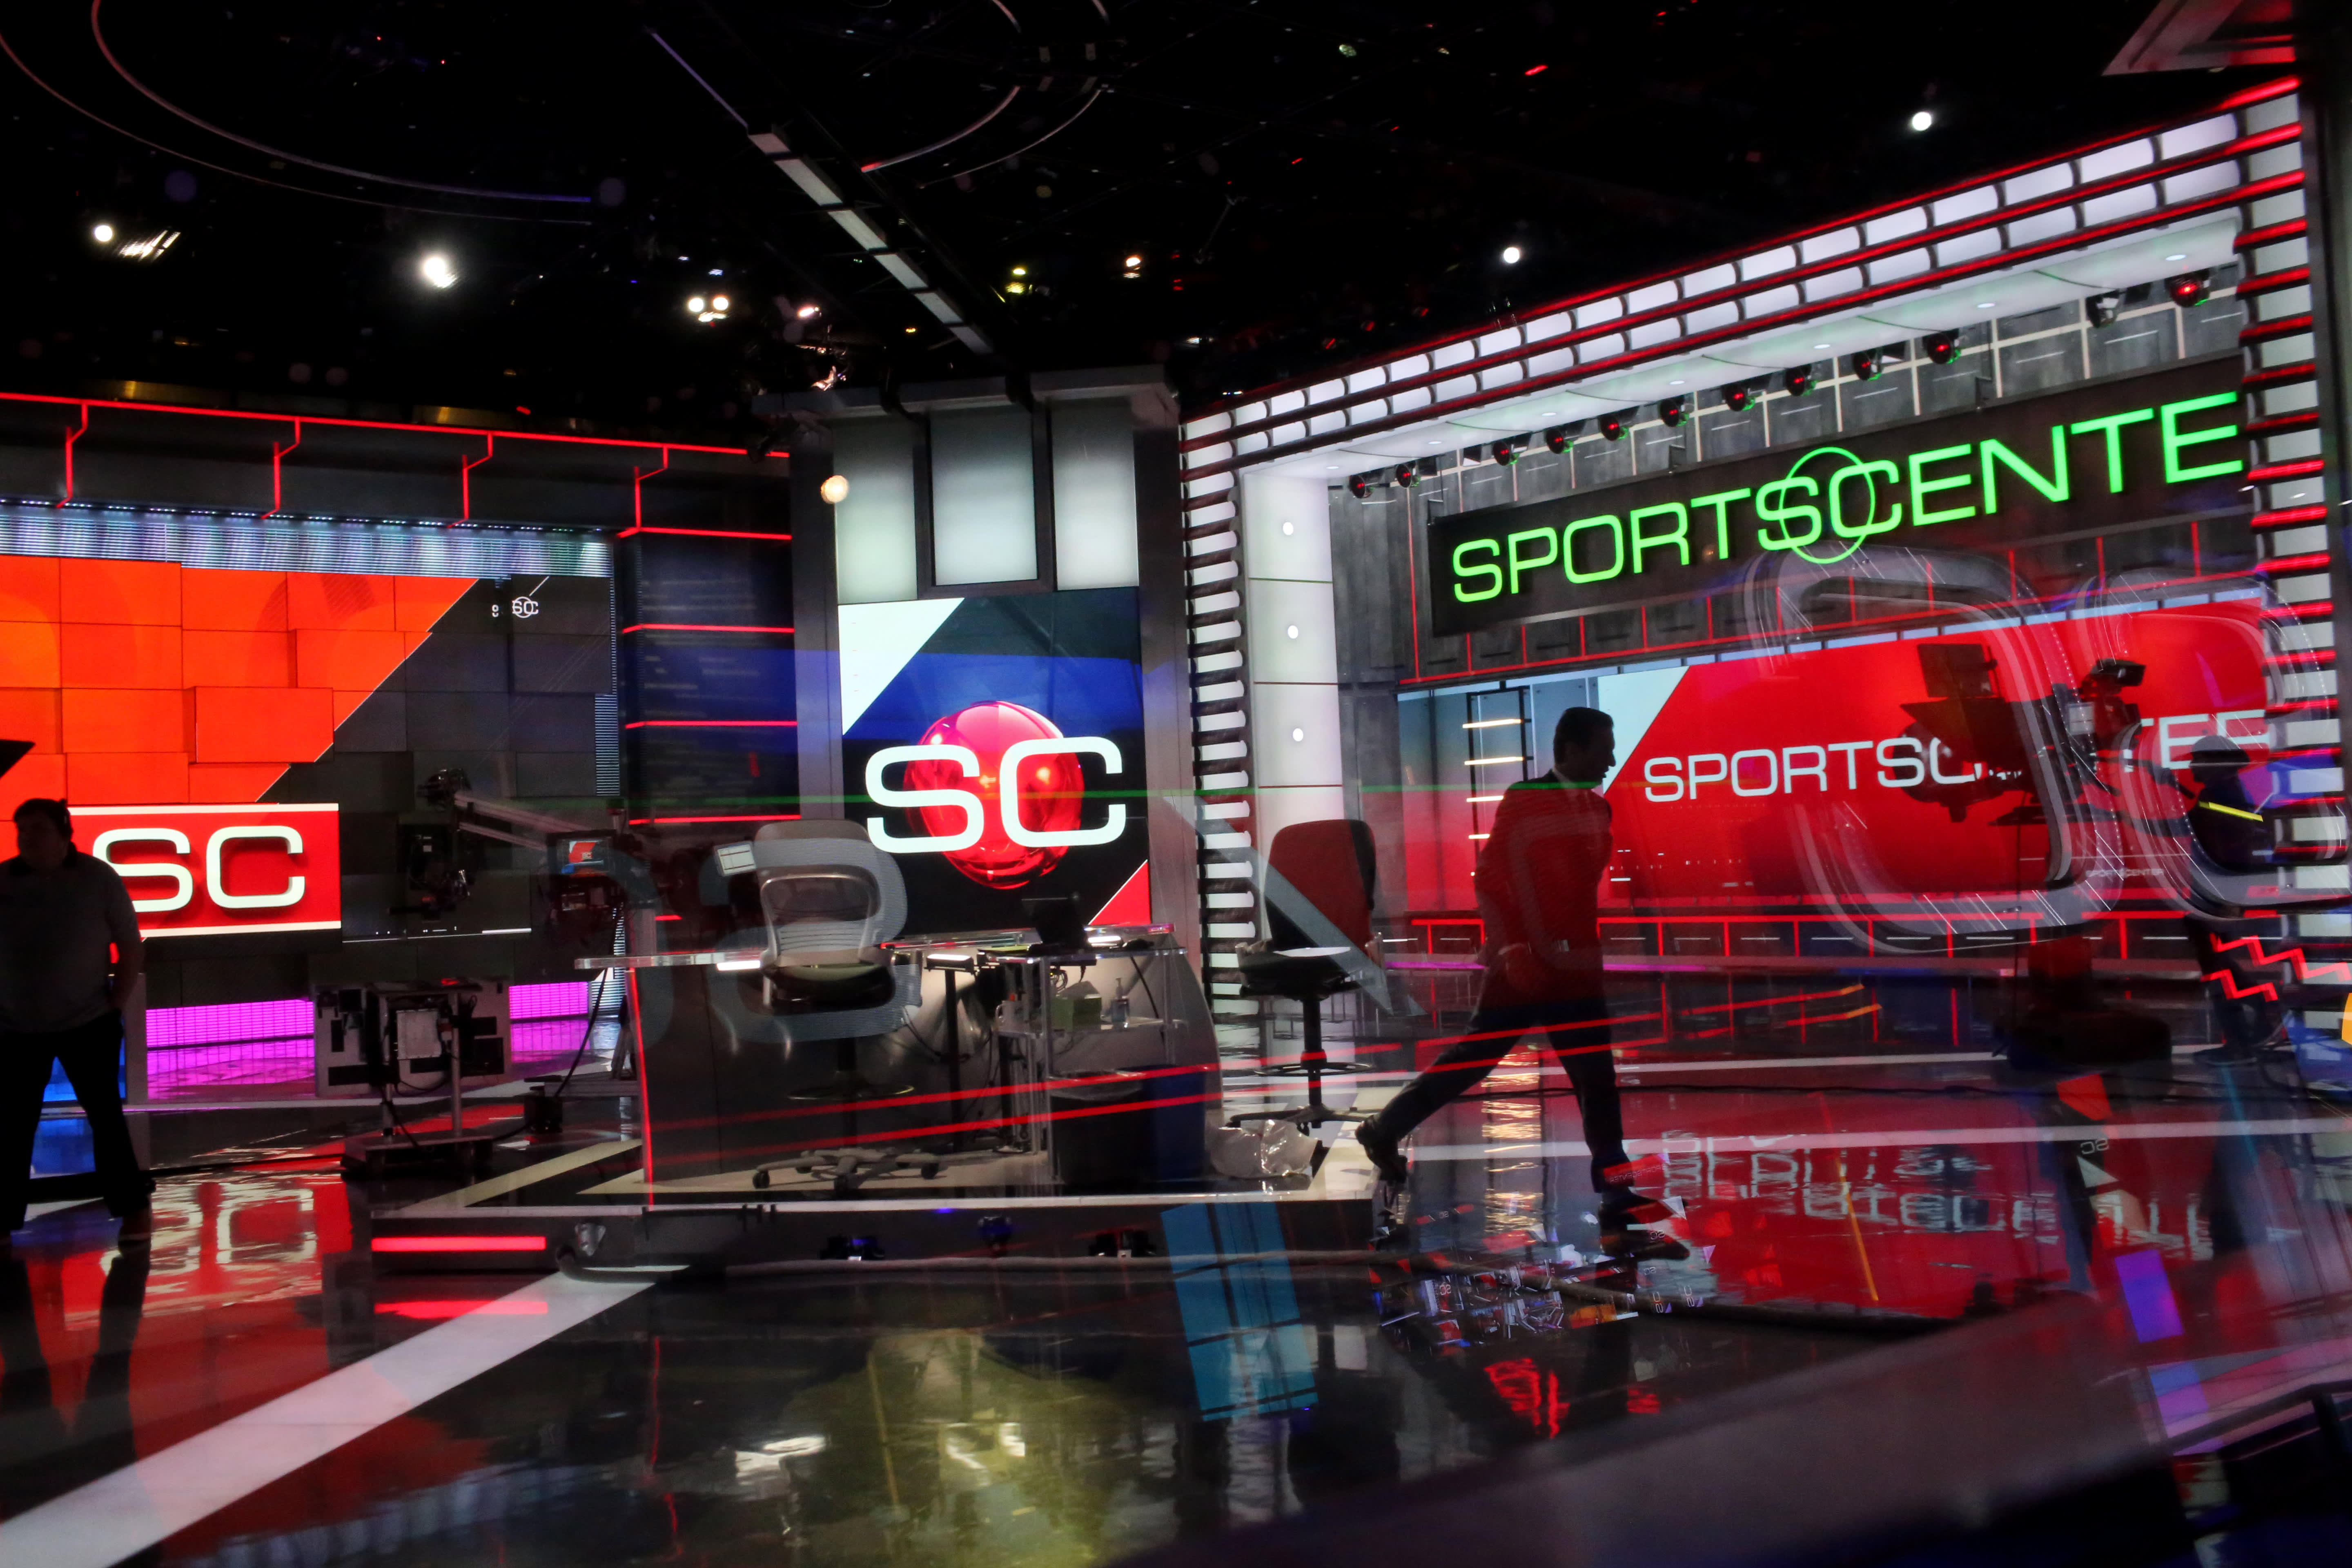 ESPN betting sportsbook launches via Penn Entertainment partnership